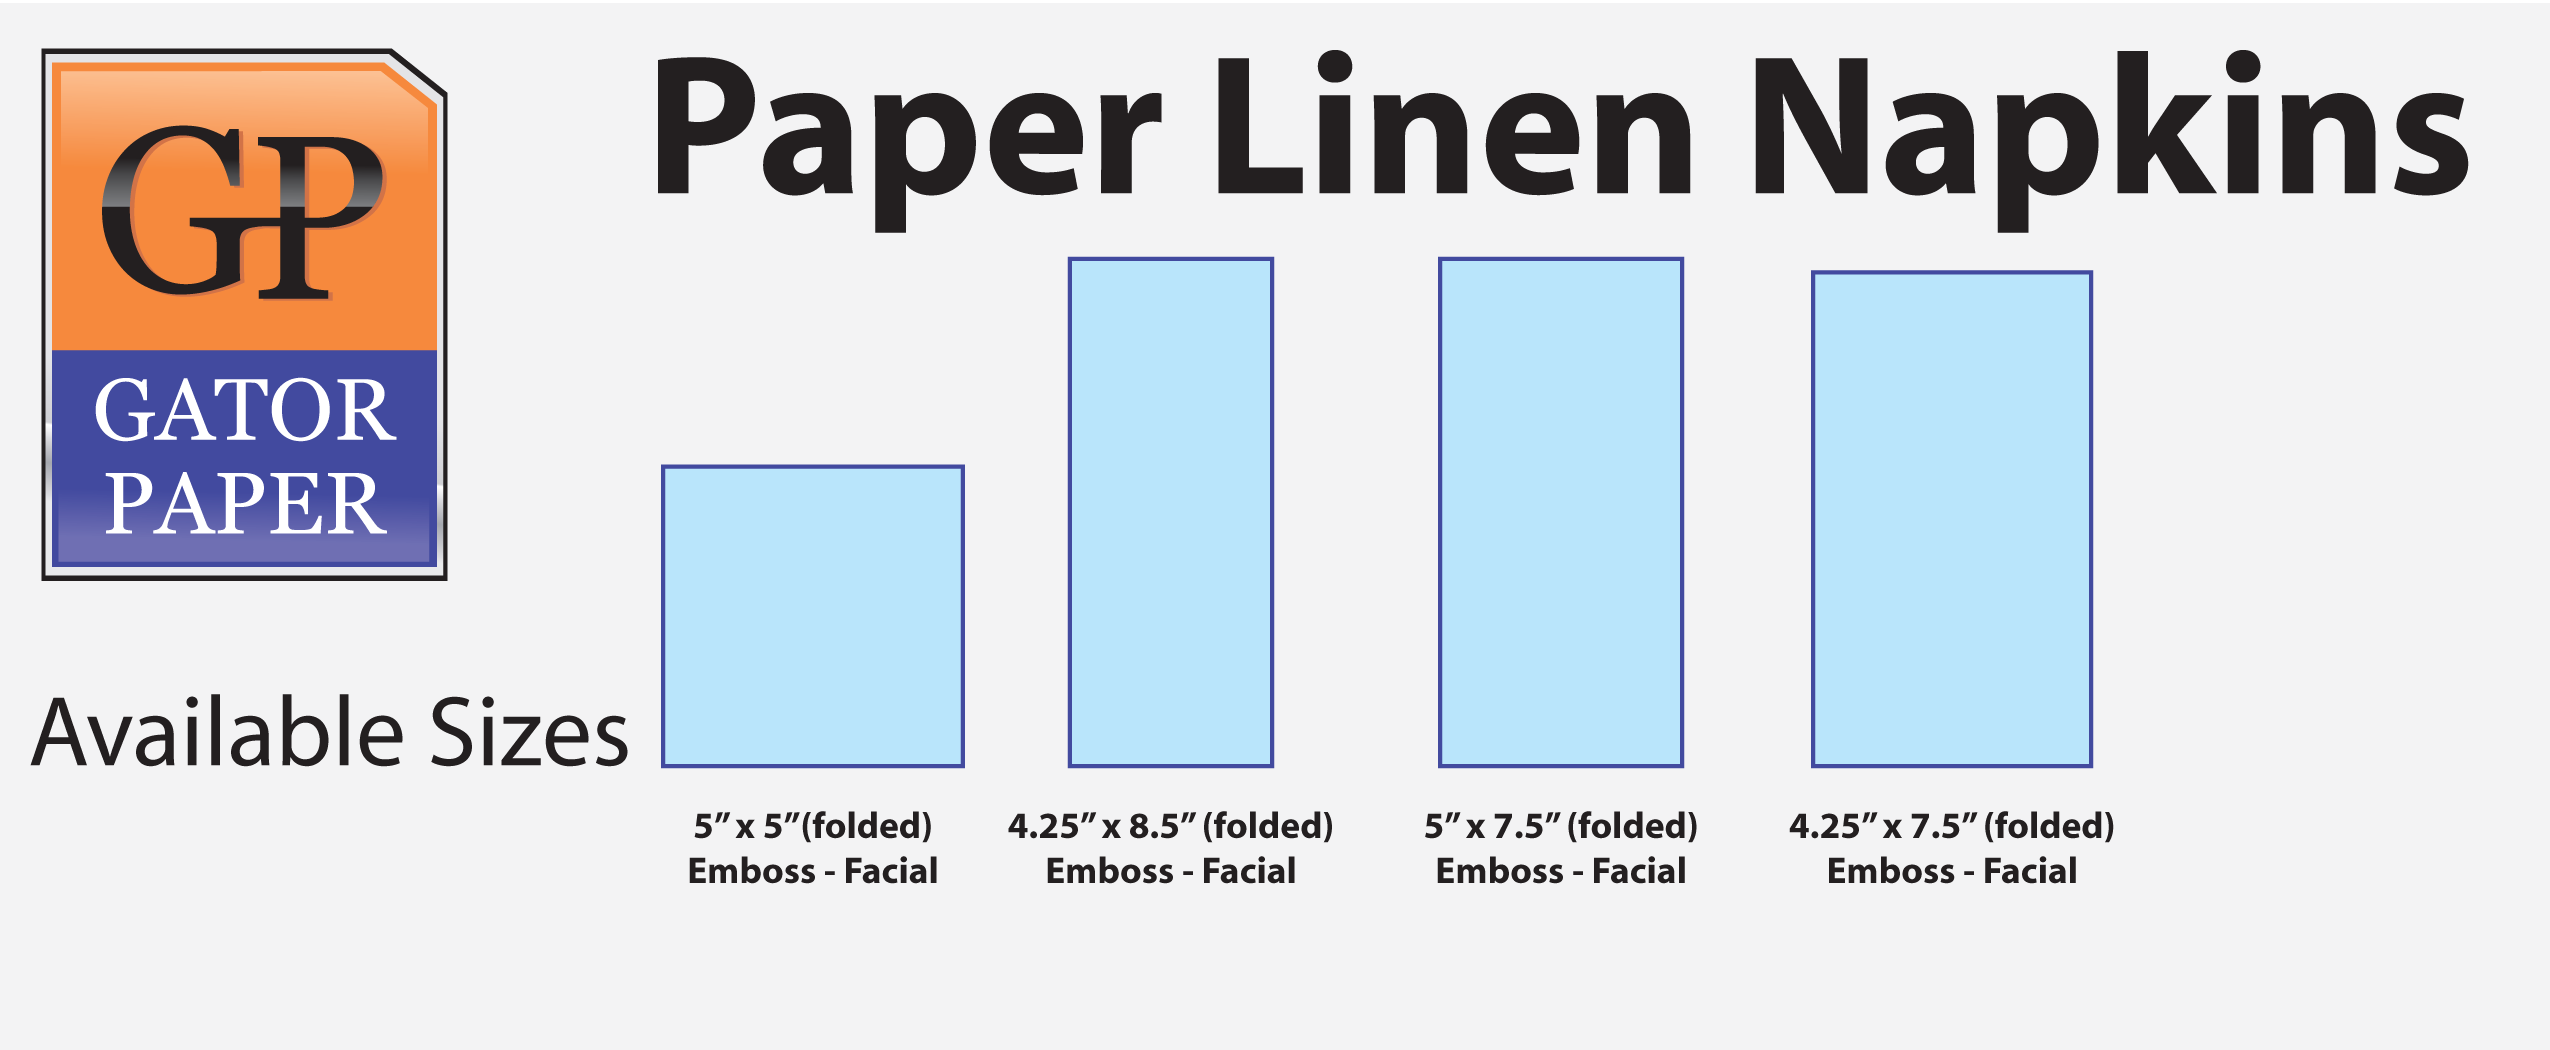 https://gatorpaper.net/wp-content/uploads/2017/11/paper-linen-napkins-gator-paper-printing.png